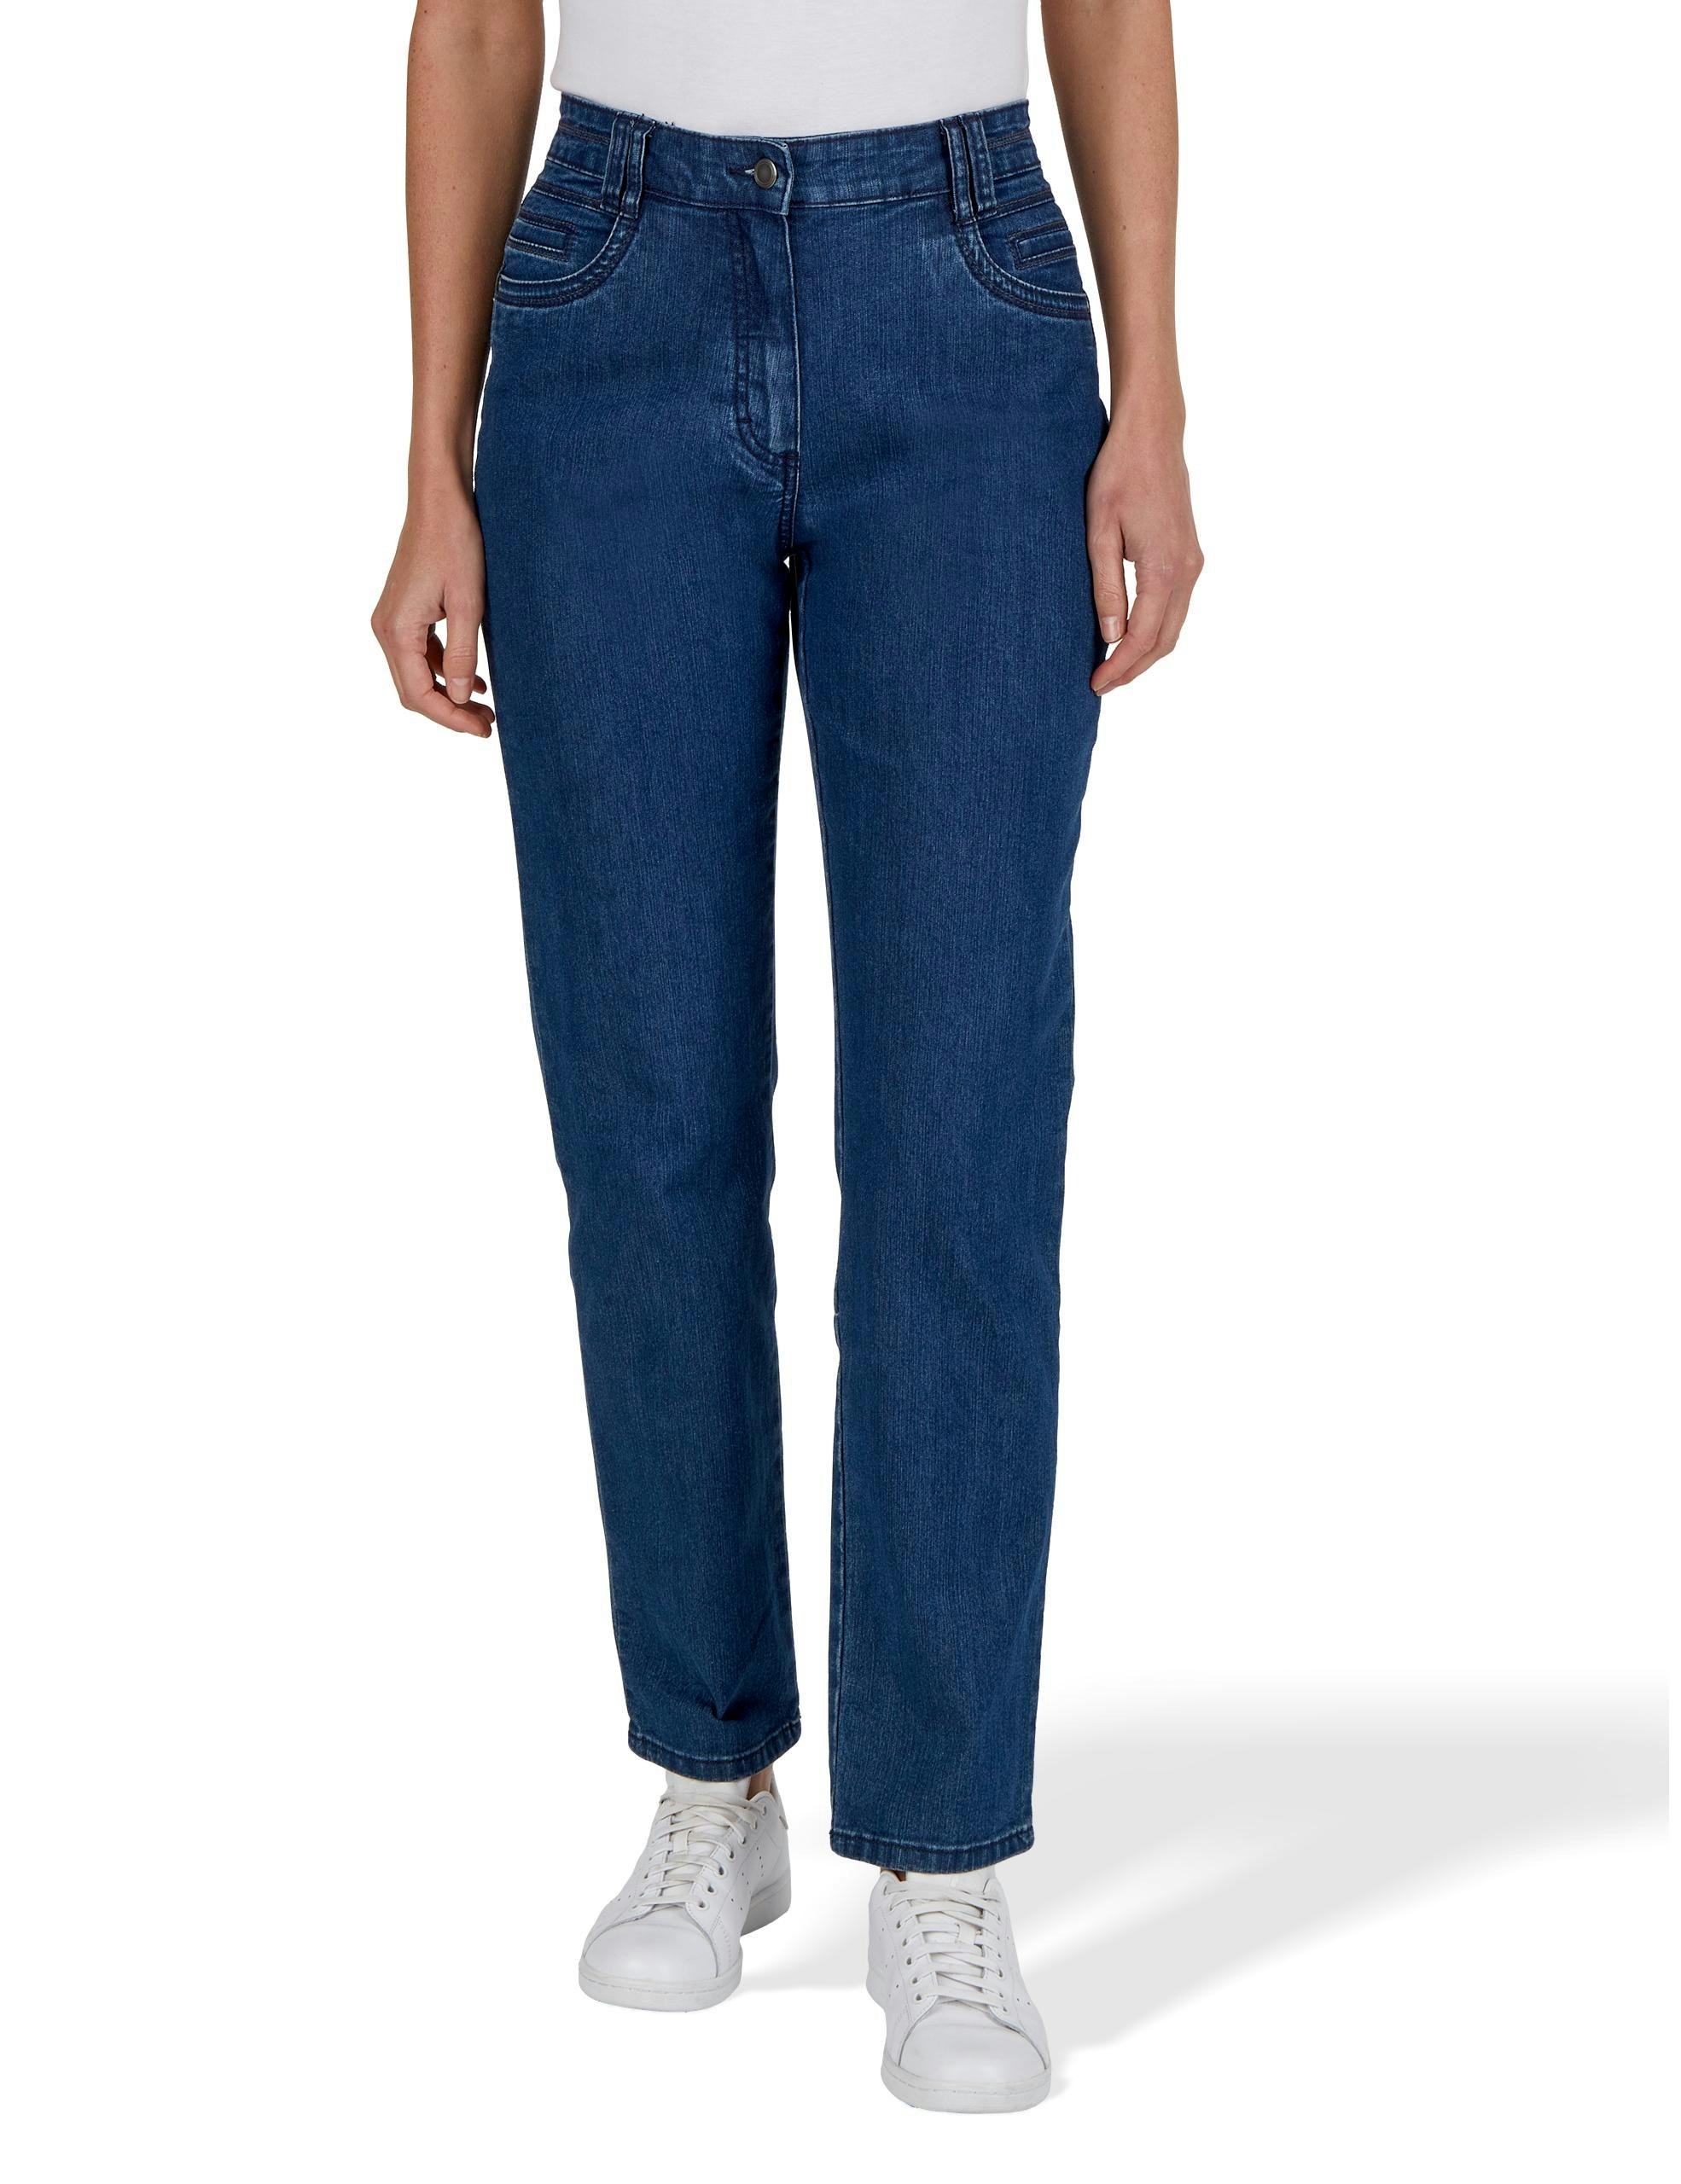 Rot 40 Rabatt 94 % DAMEN Jeans Elastisch Trucco Straight jeans 